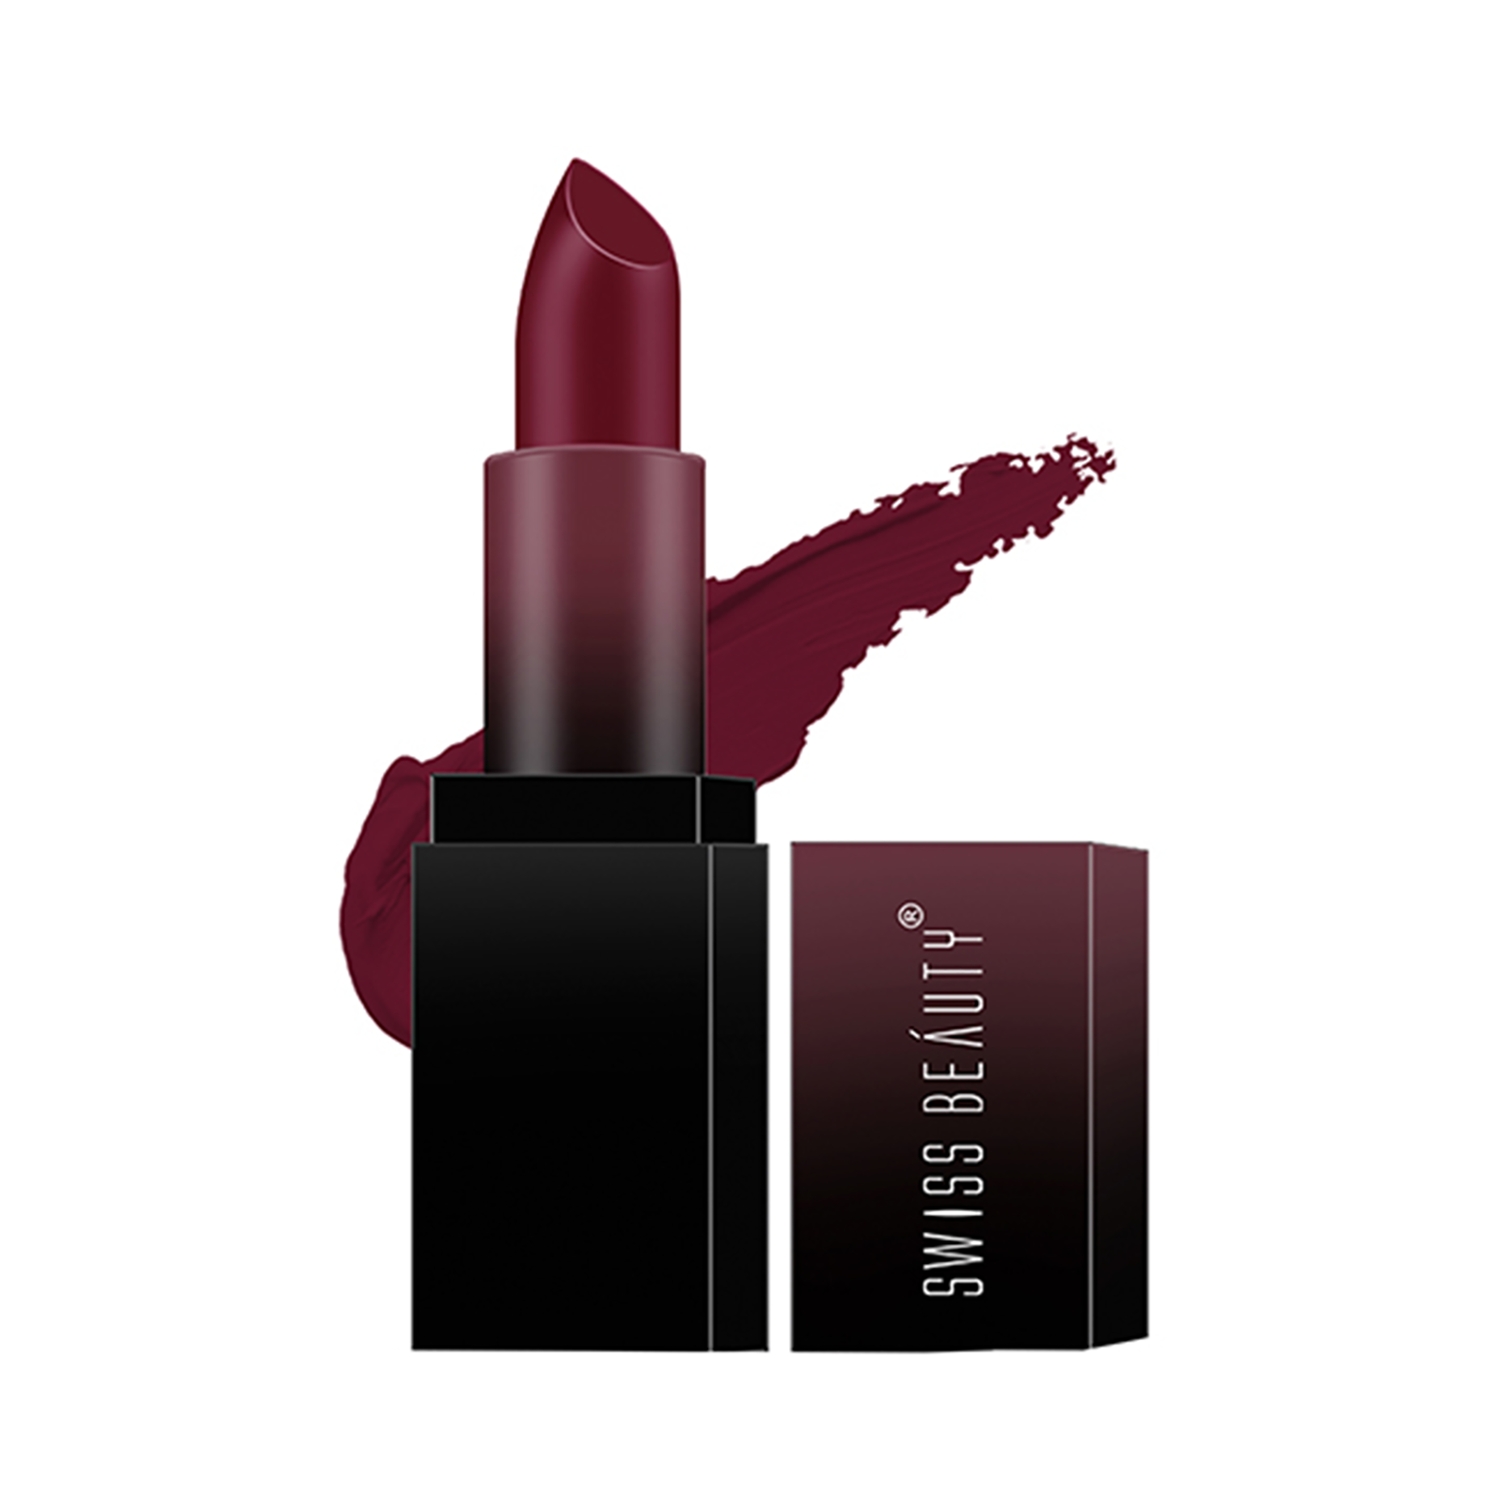 Swiss Beauty | Swiss Beauty HD Matte Lipstick - Dynamite Berry (3.5g)